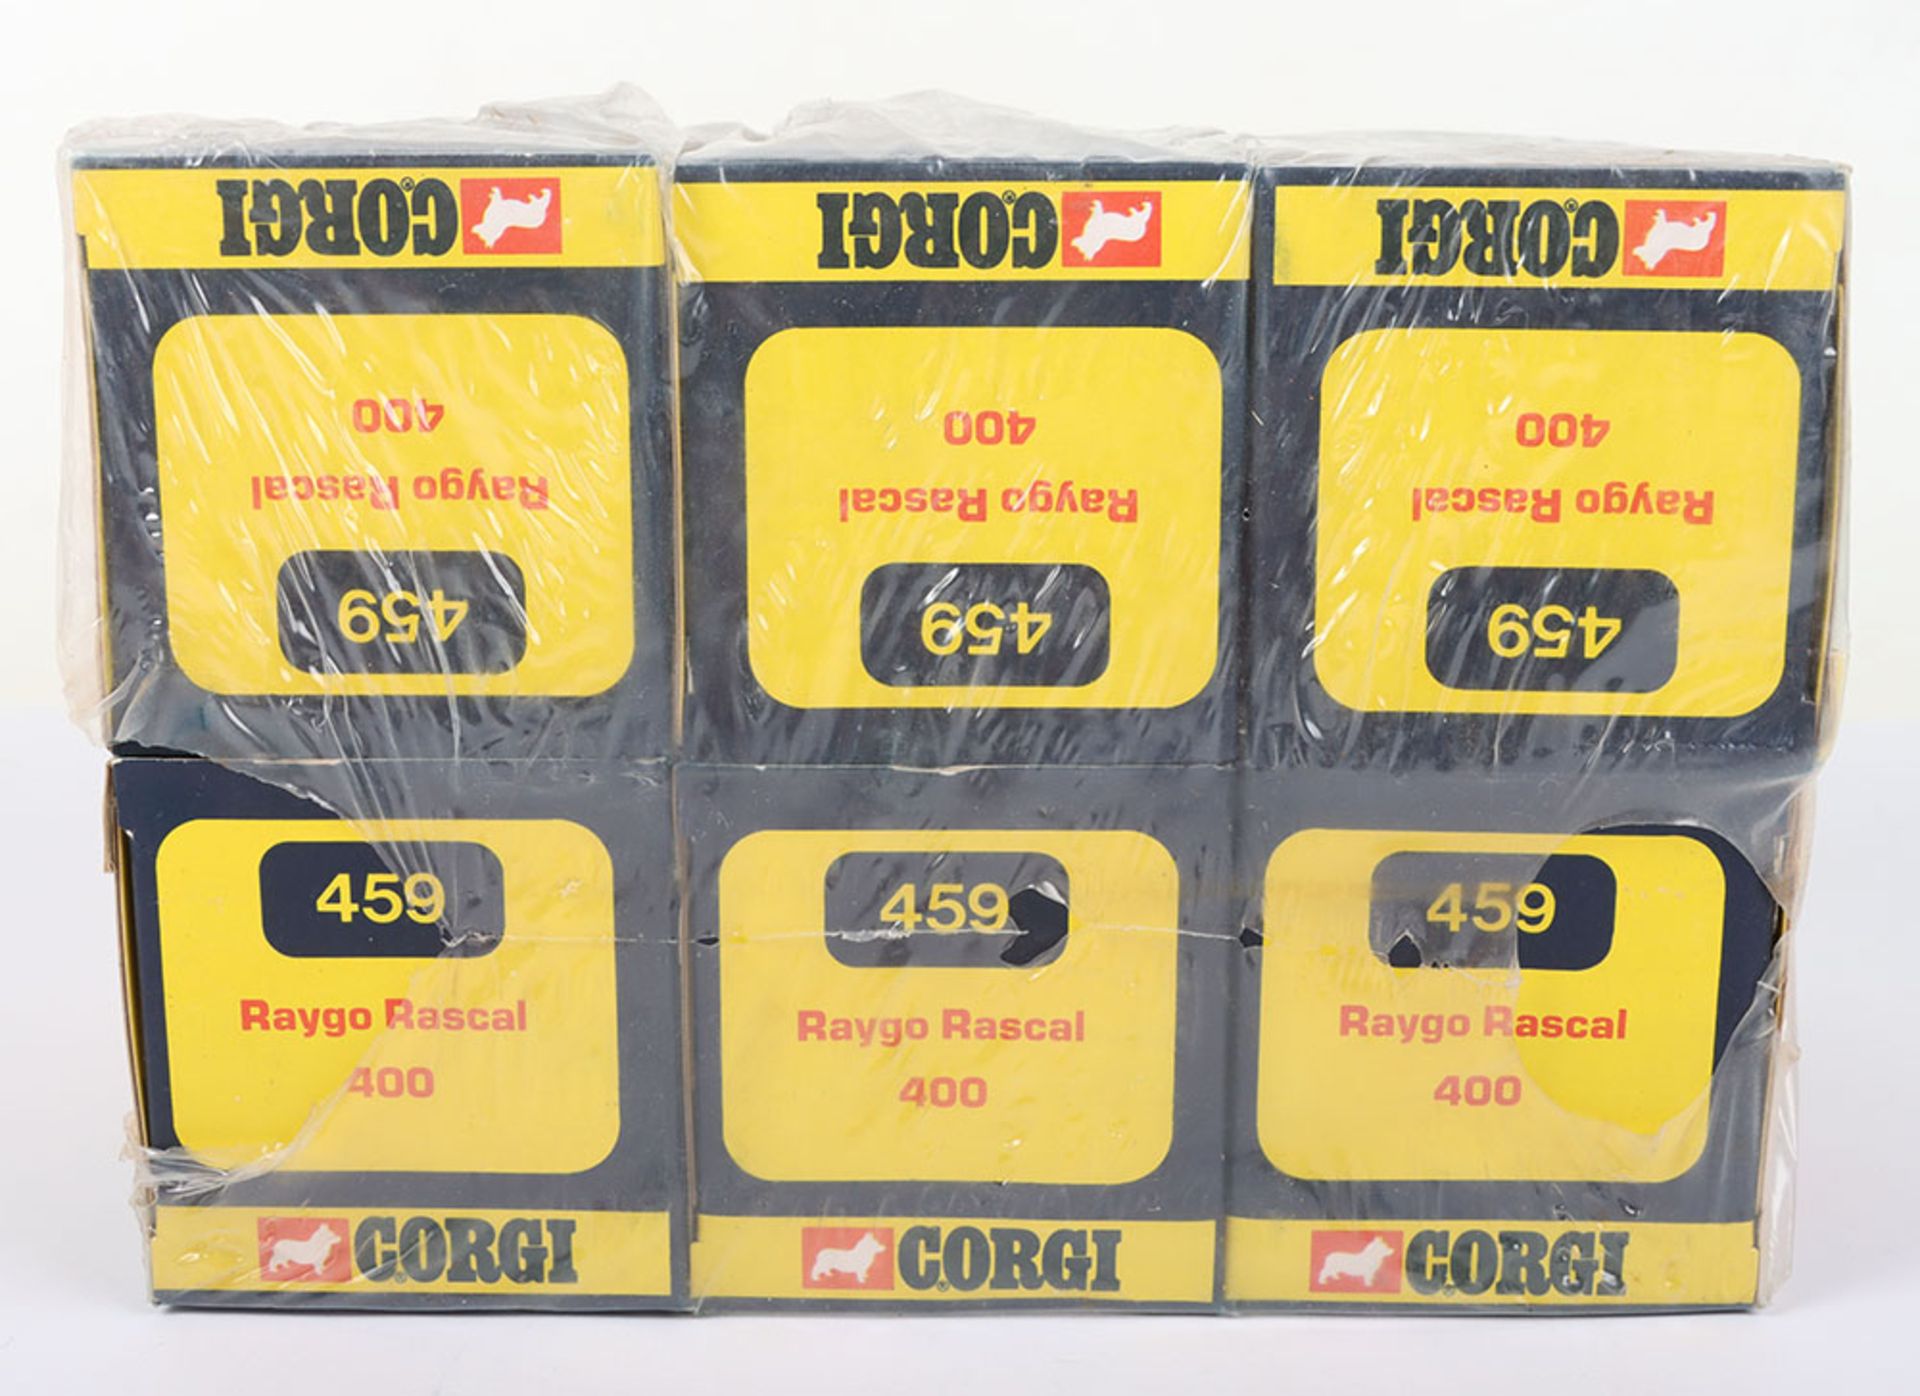 Corgi Trade Pack of six 459 Raygo Rascal 400 Road Rollers - Image 2 of 7